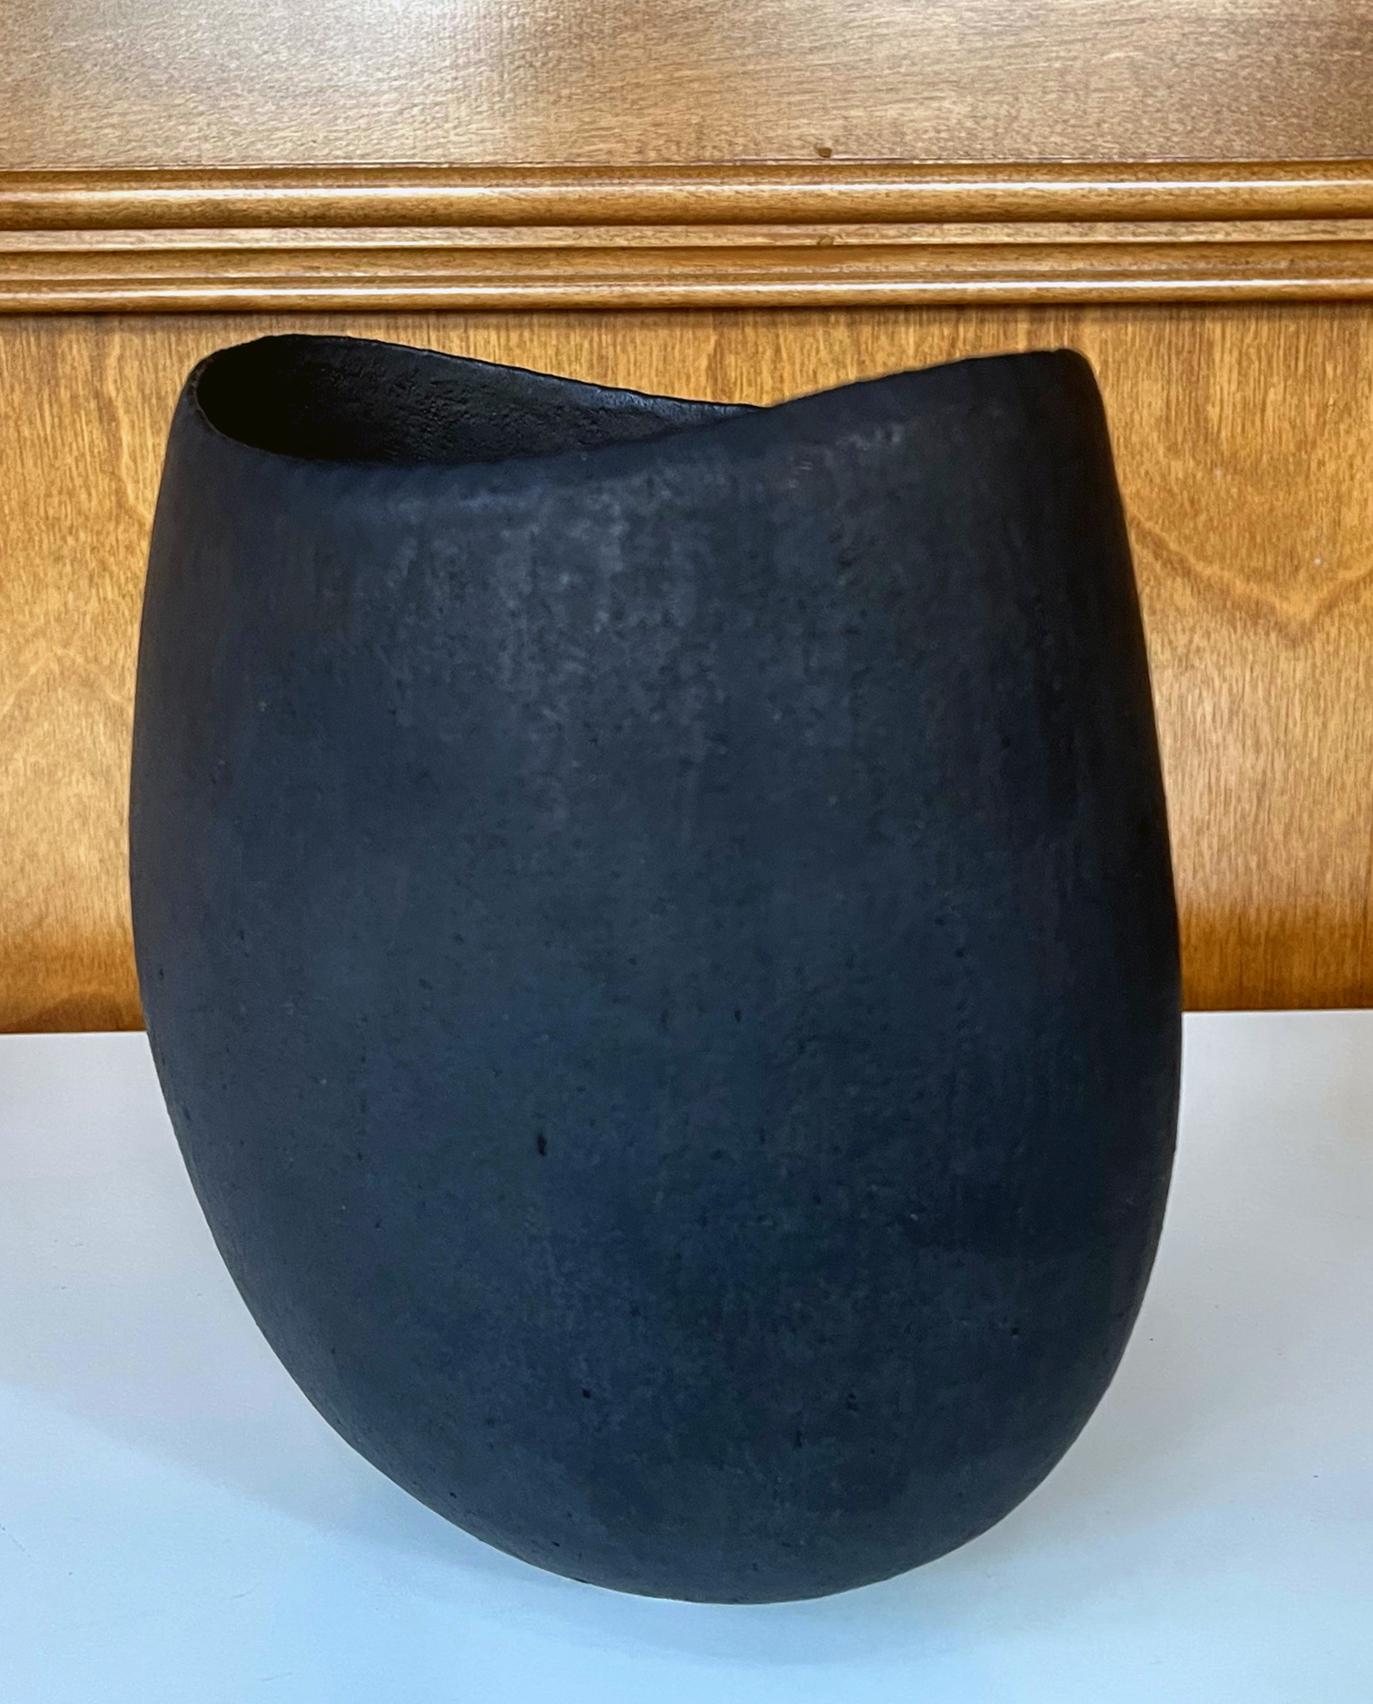 Ceramic Oval Vessel by British Studio Potter John Ward In Good Condition For Sale In Atlanta, GA